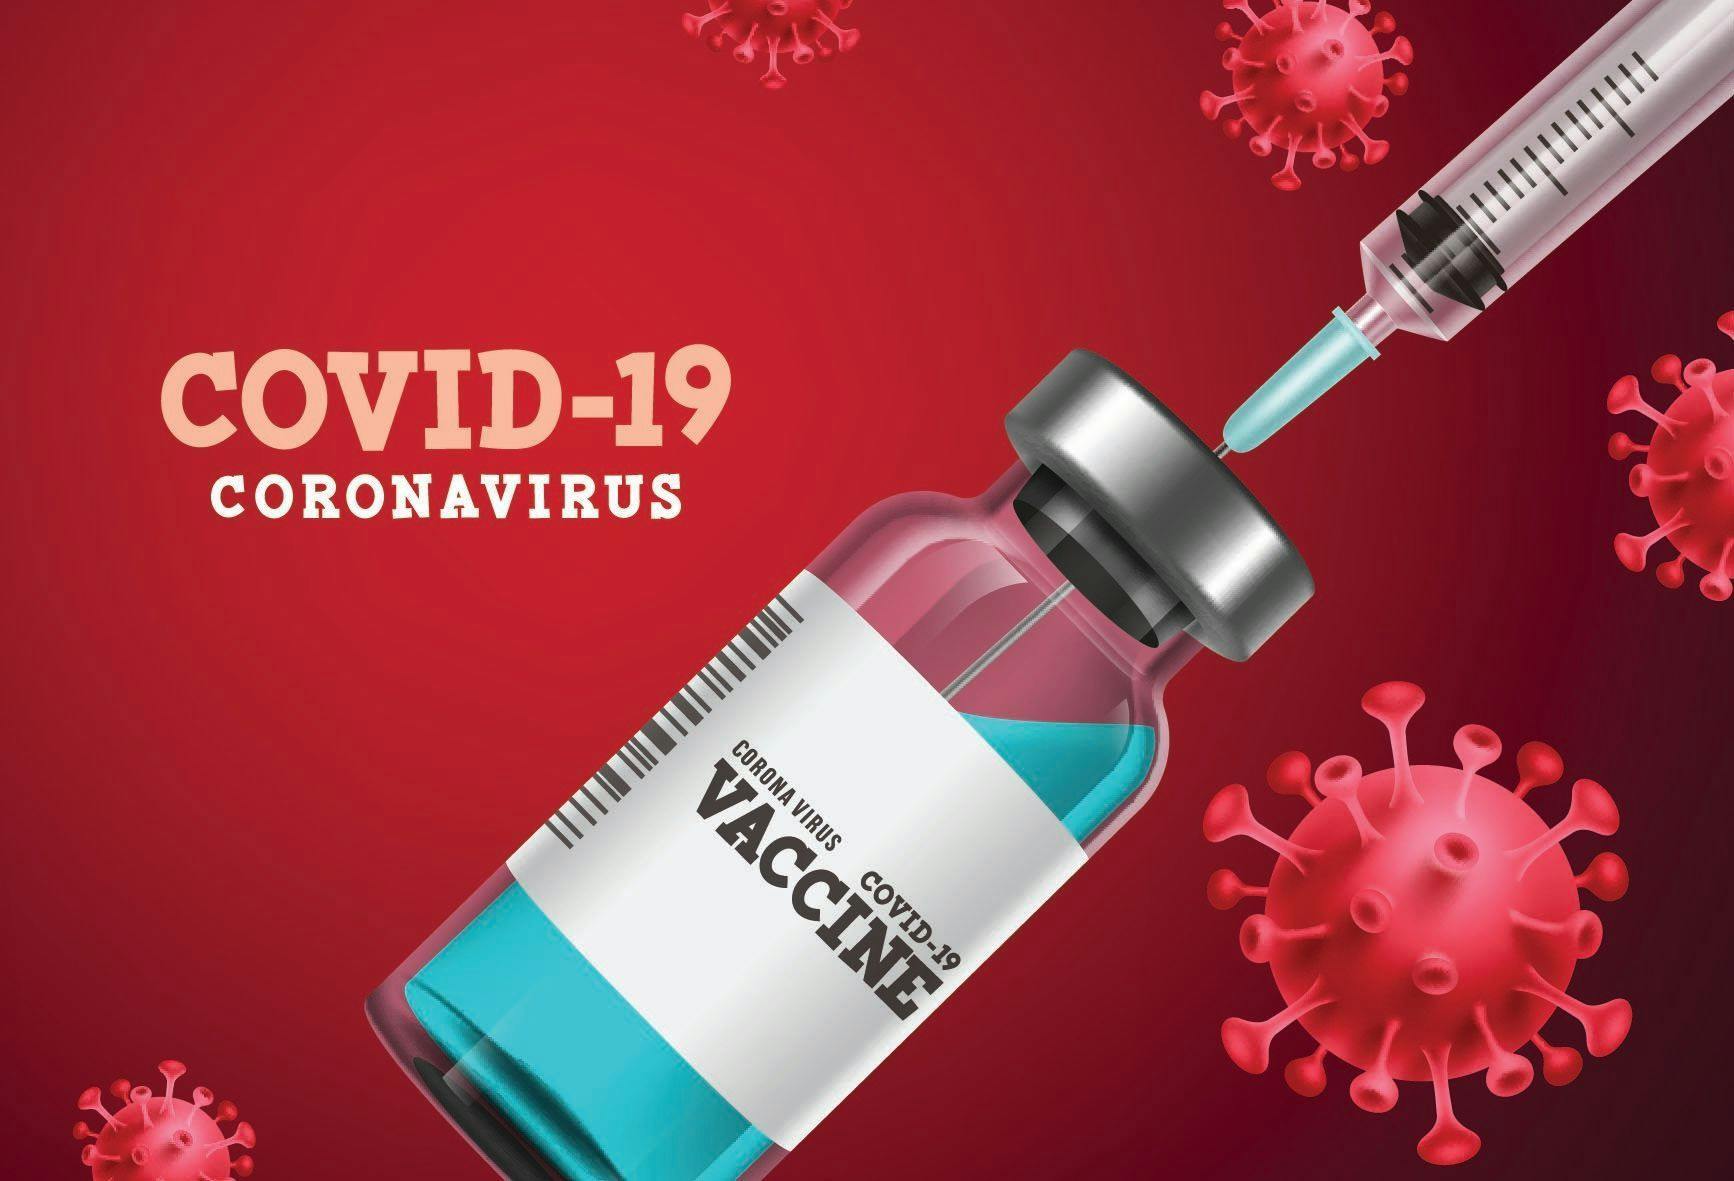 Coronavirus: Astrazeneca/Oxford vaccine candidate looks promising